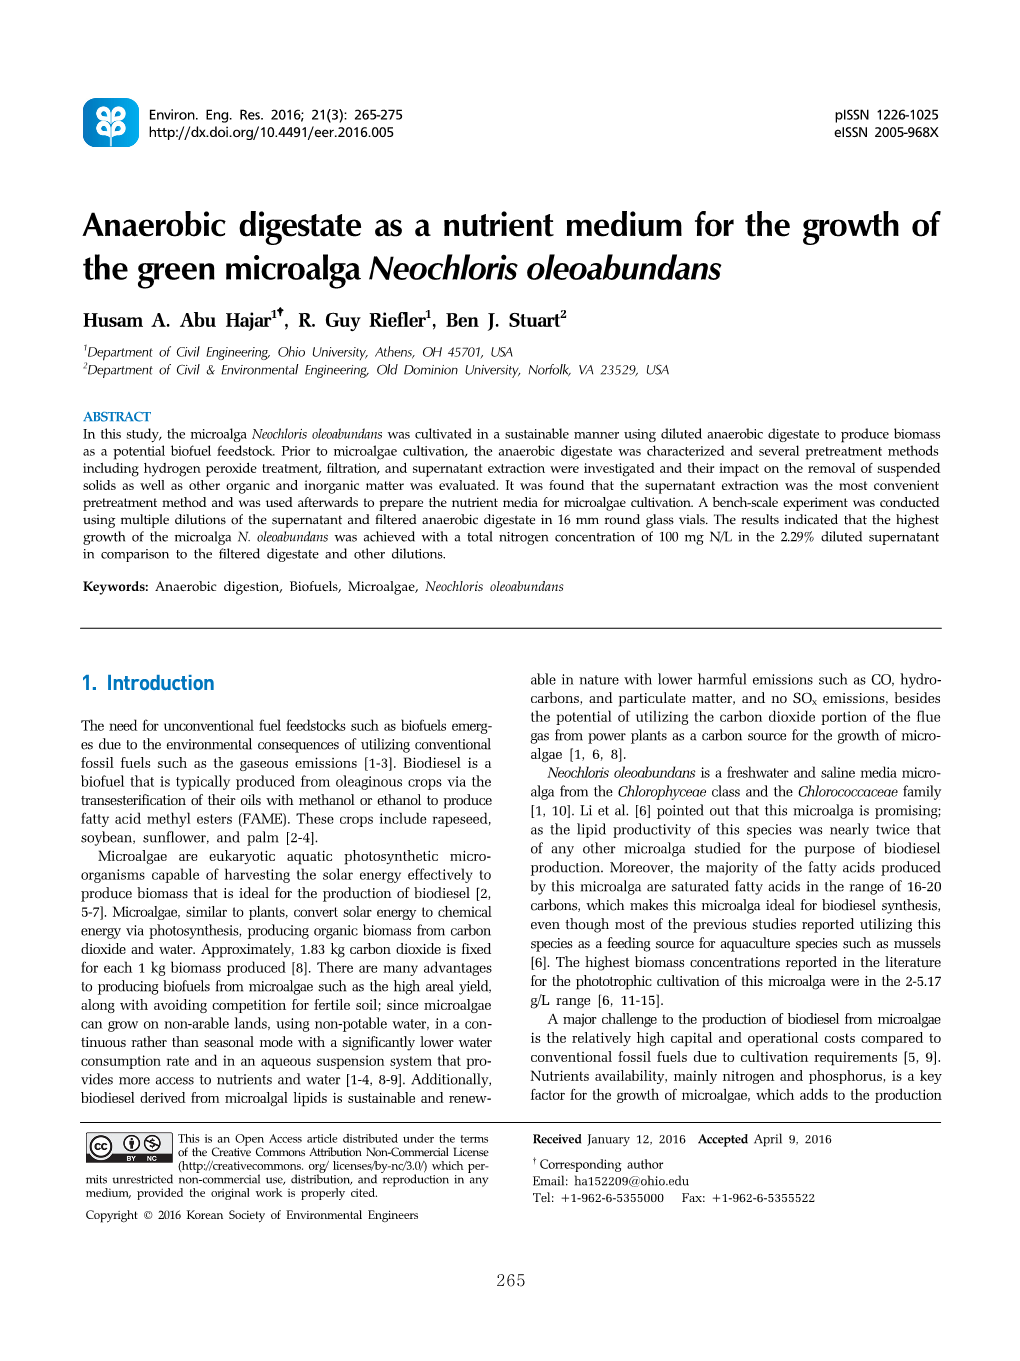 Anaerobic Digestate As a Nutrient Medium for the Growth of the Green Microalga Neochloris Oleoabundans